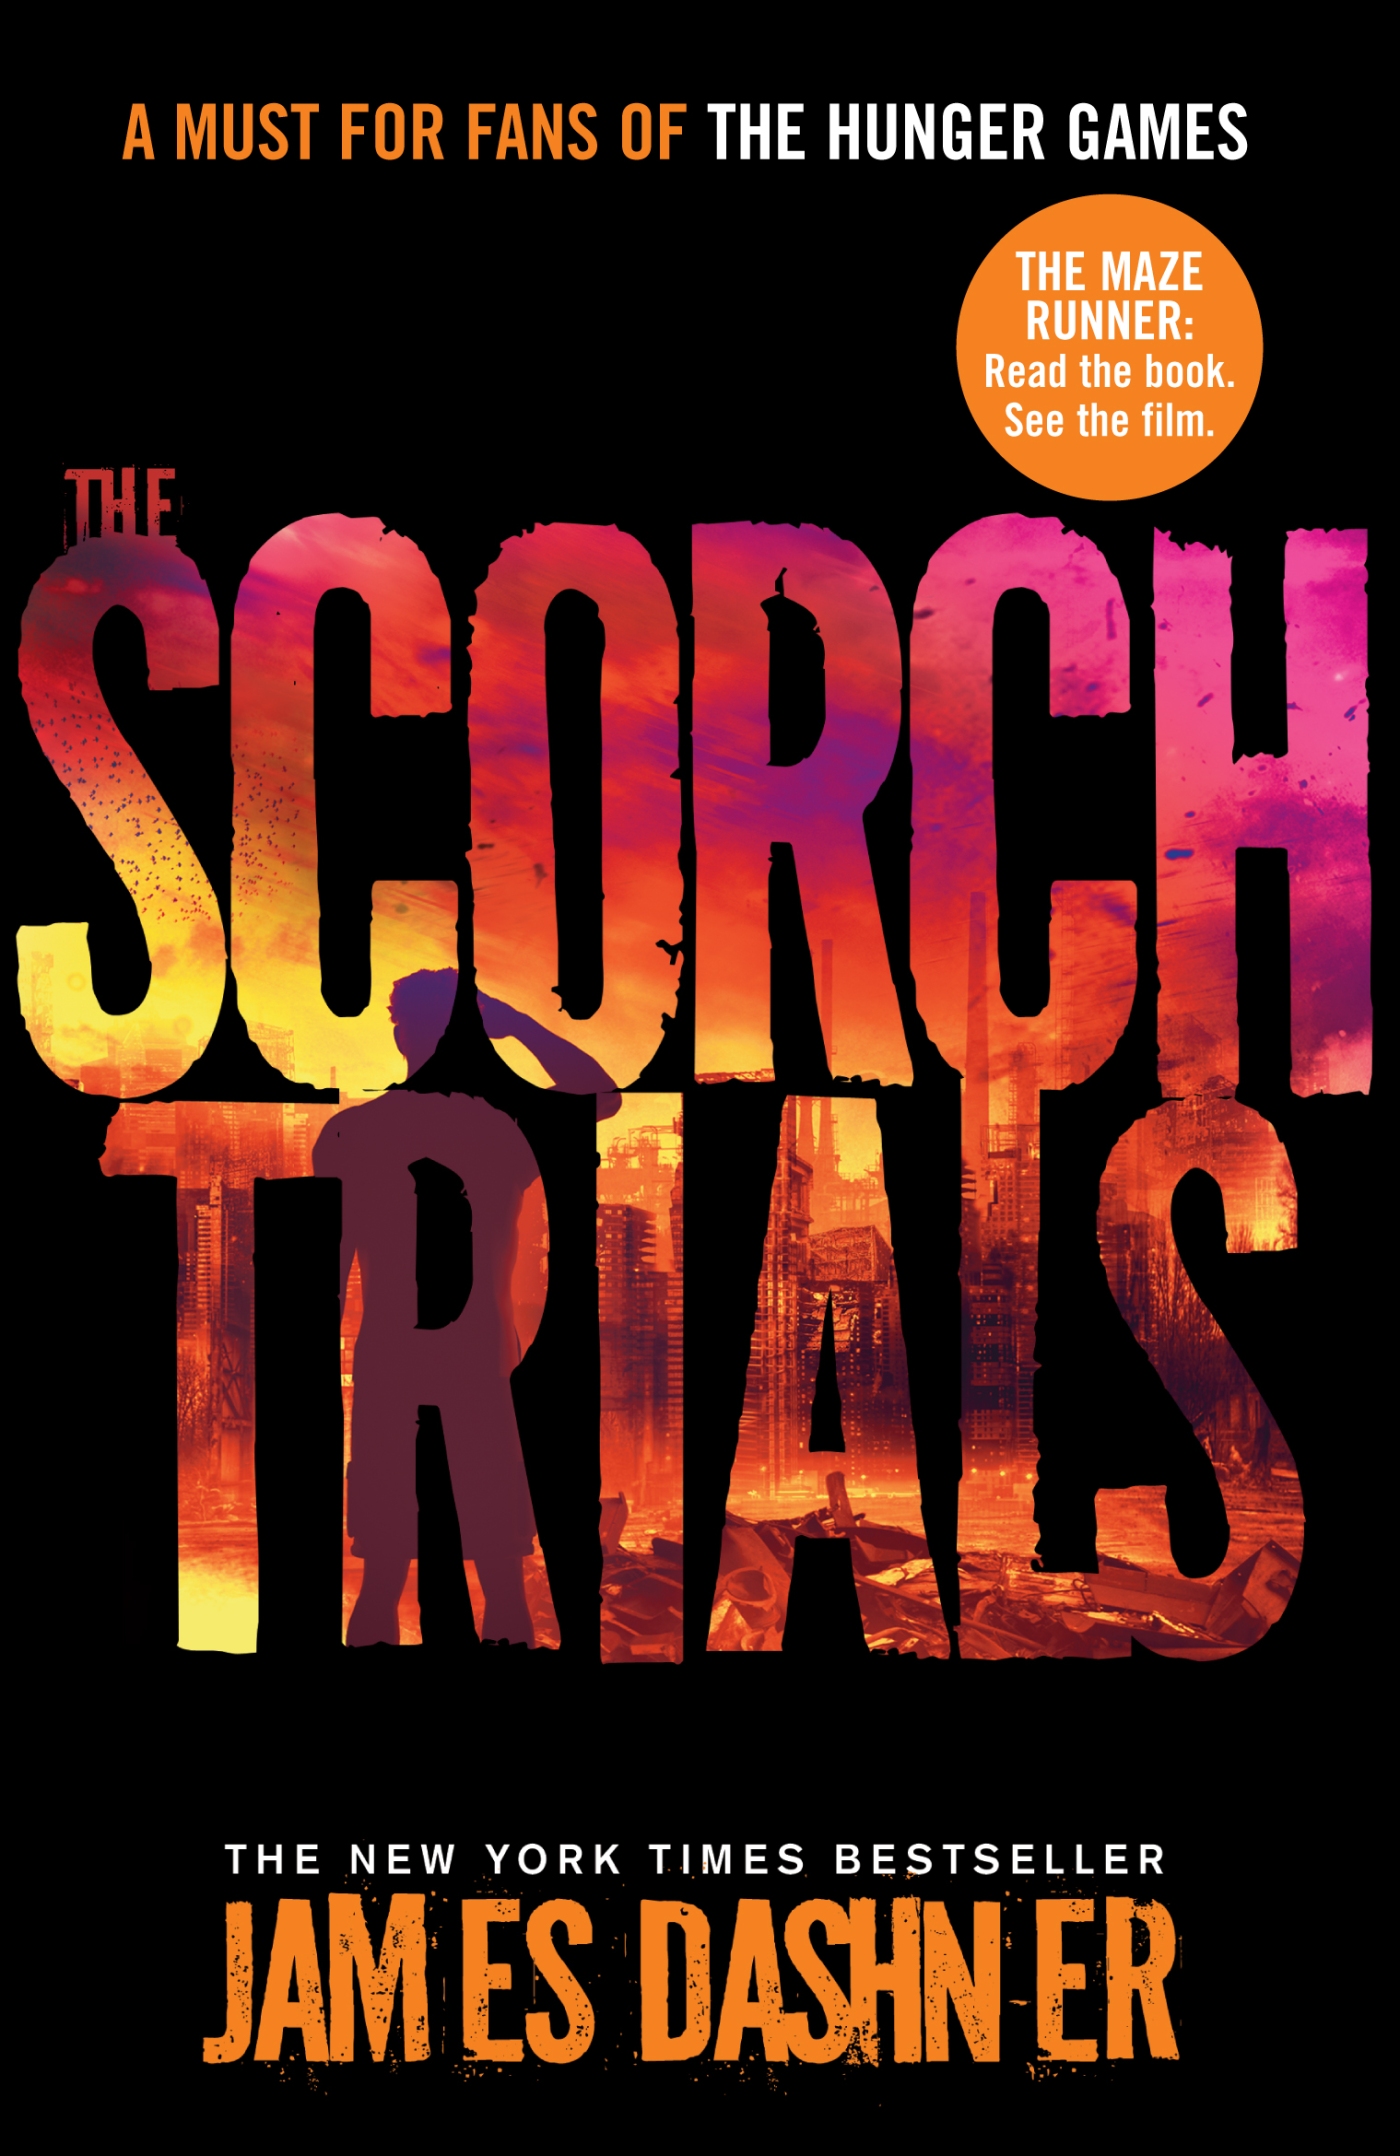 Maze Runner: The Scorch Trials Review